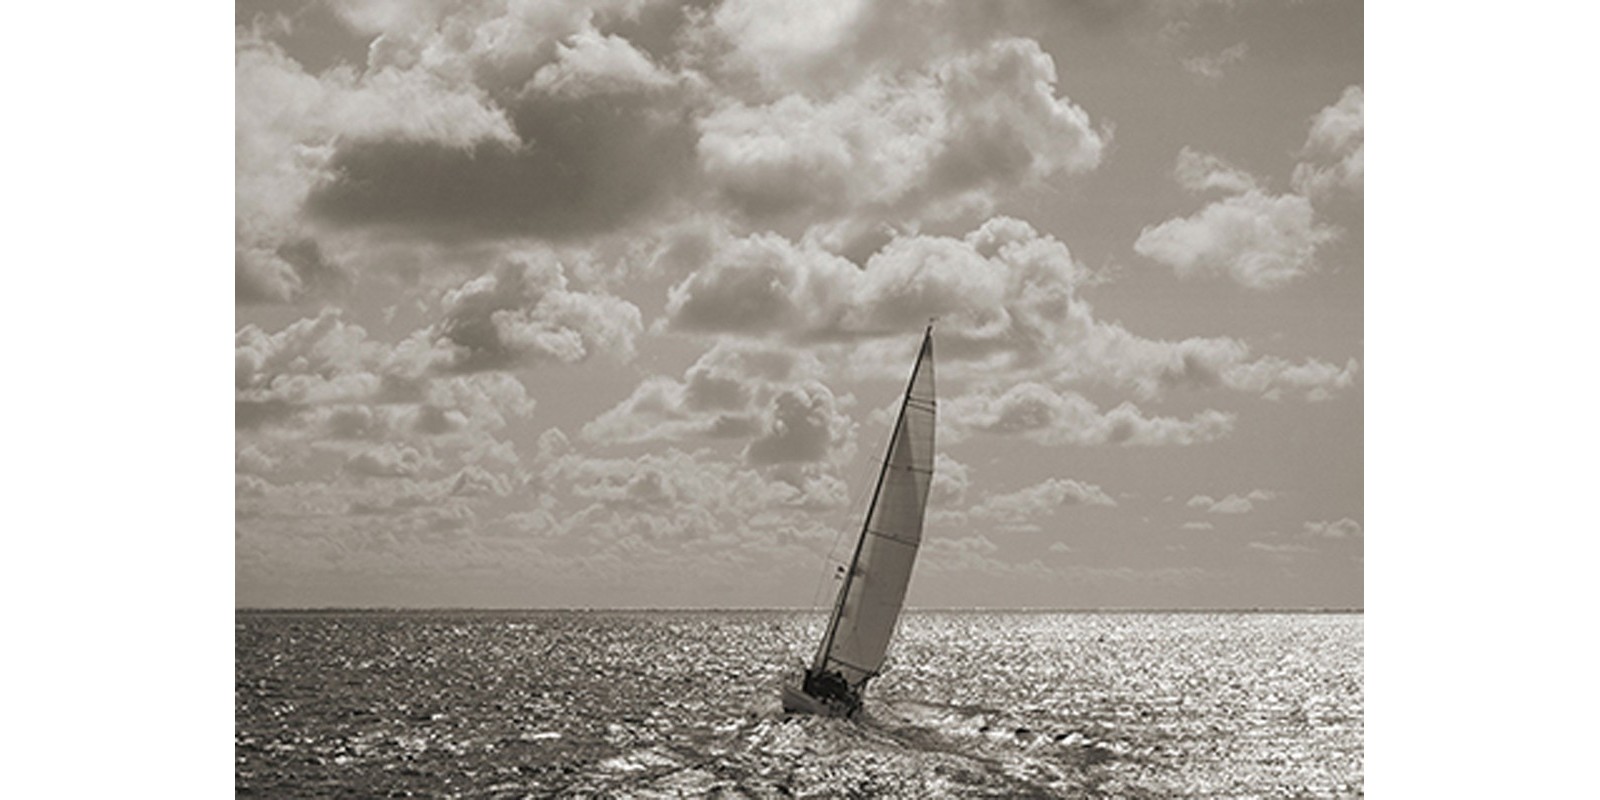 Pangea Images - Sailing